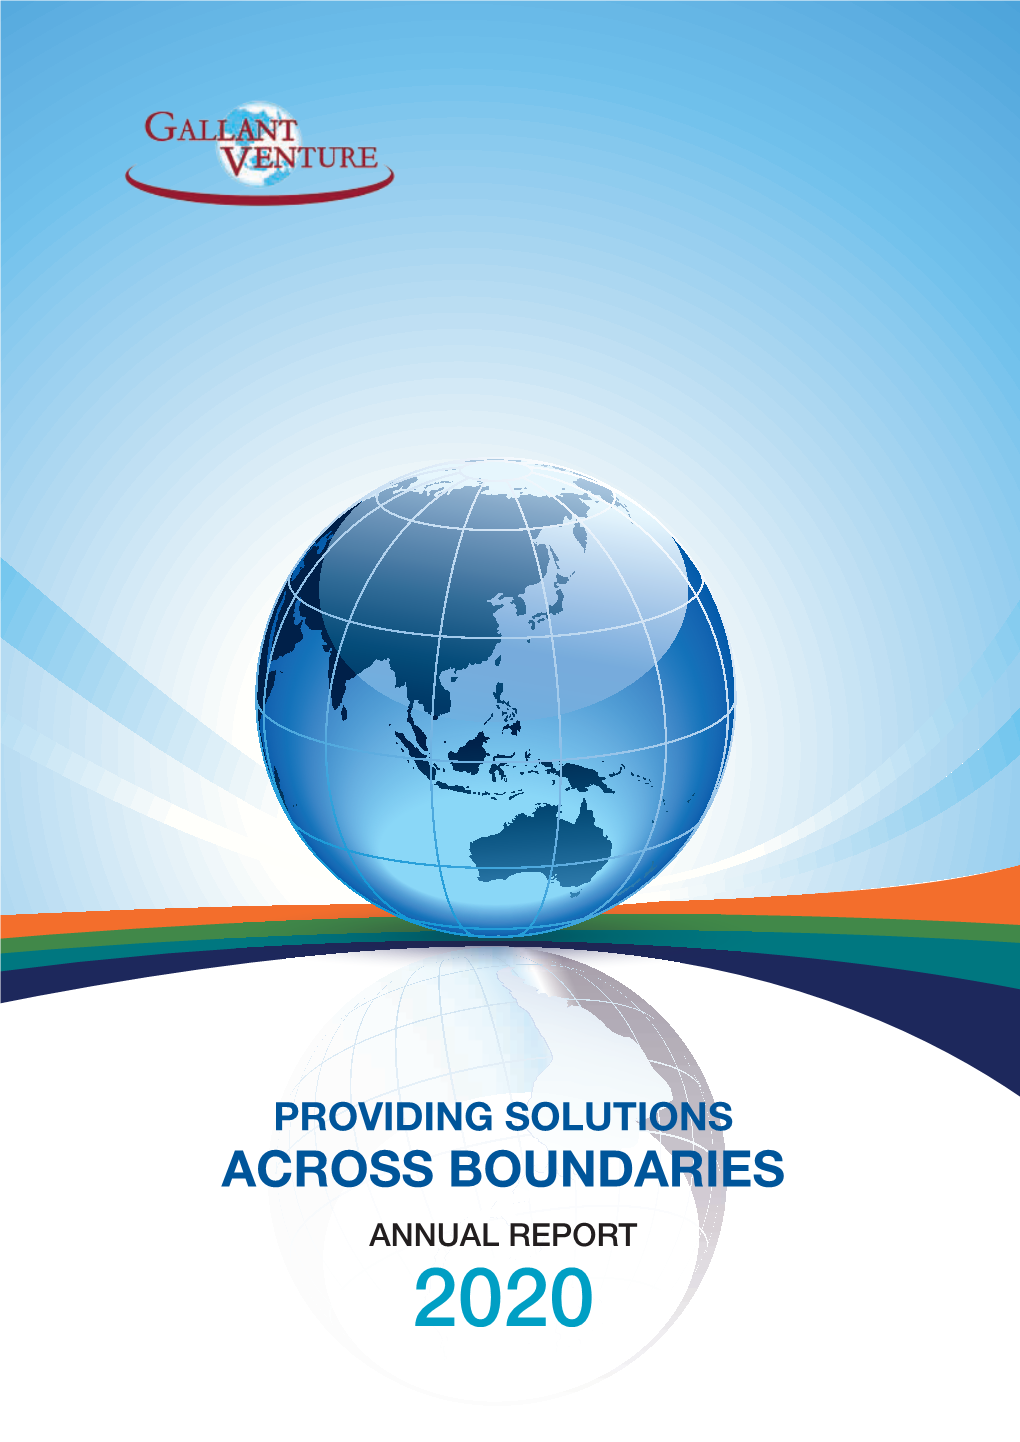 Across Boundaries Annual Report 2020 Contents